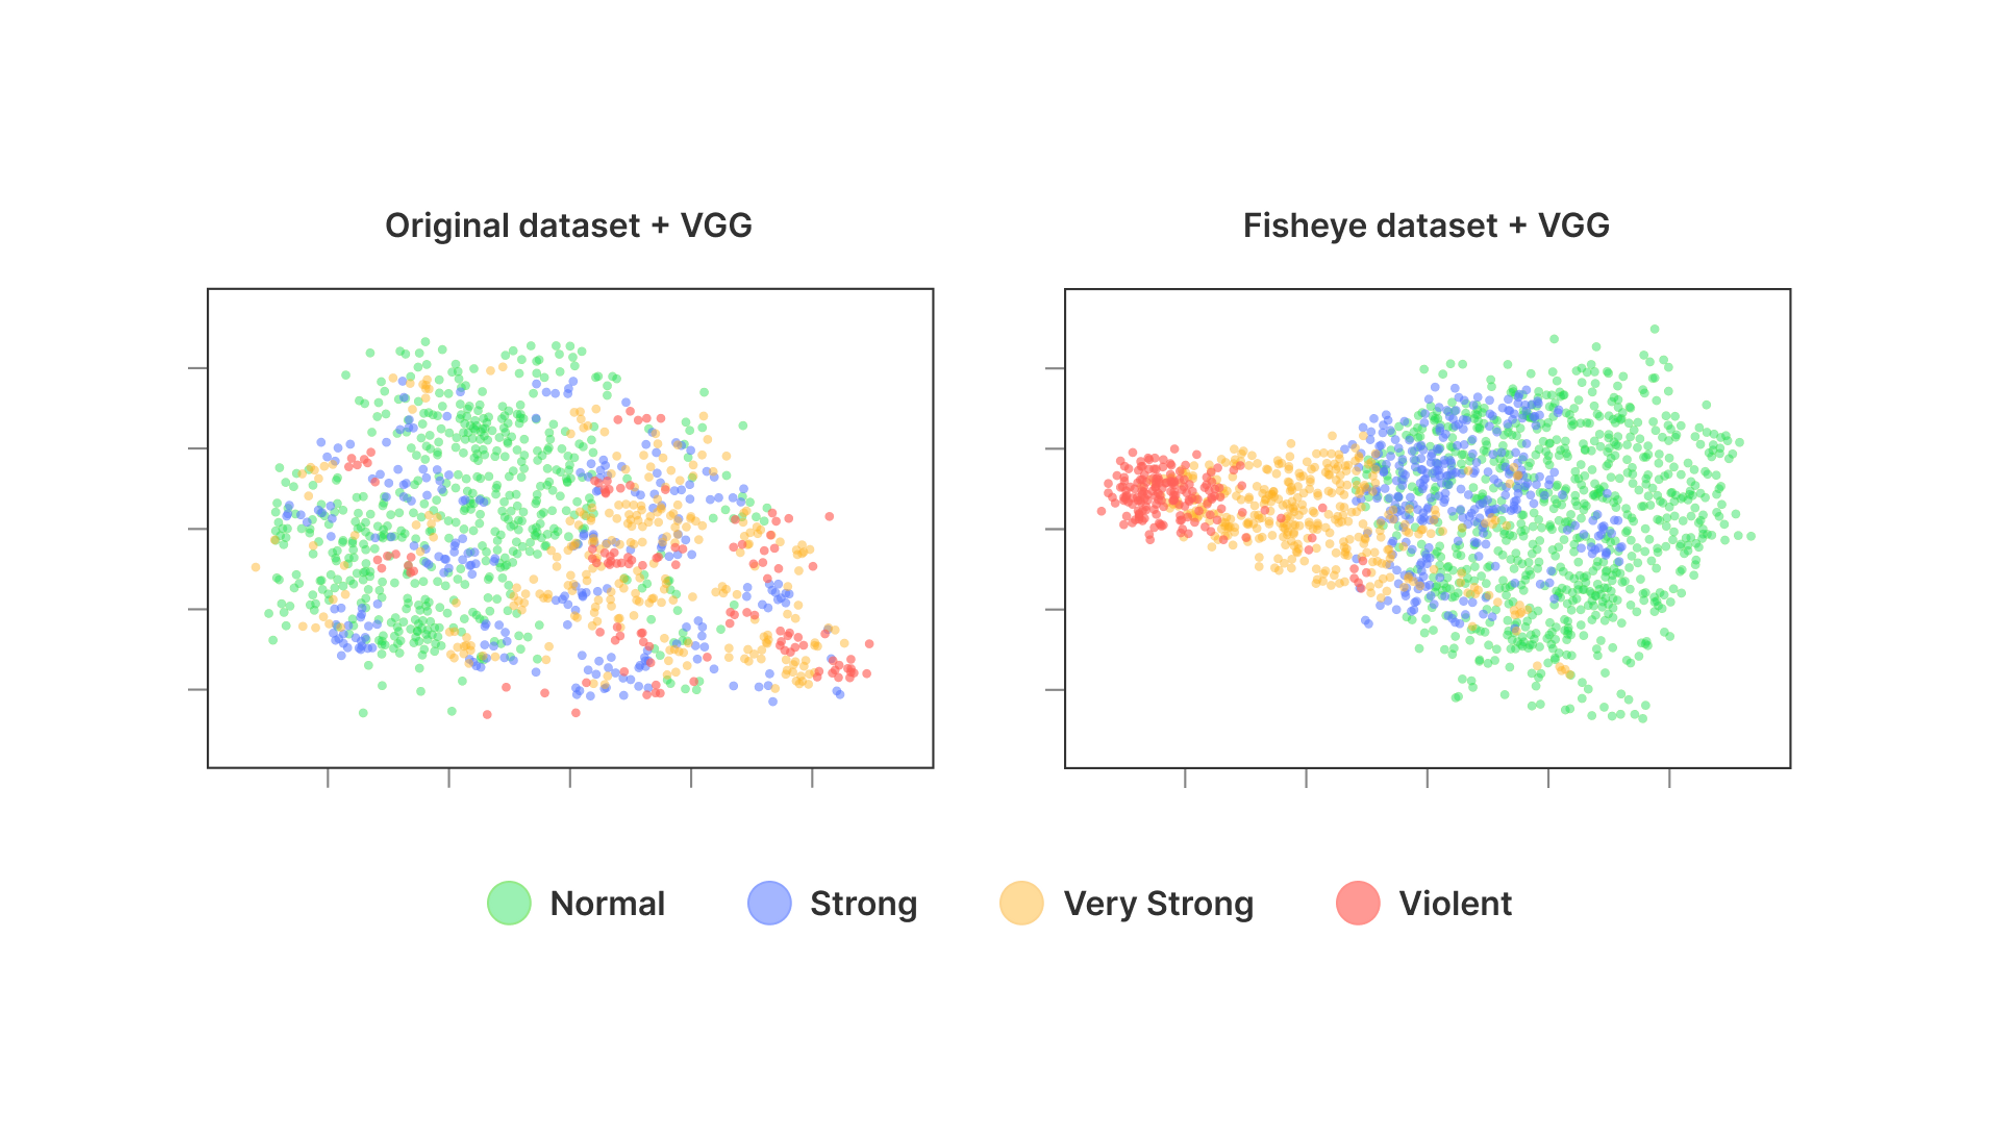 Image depicts original dataset vs fishey's dataset + VGG